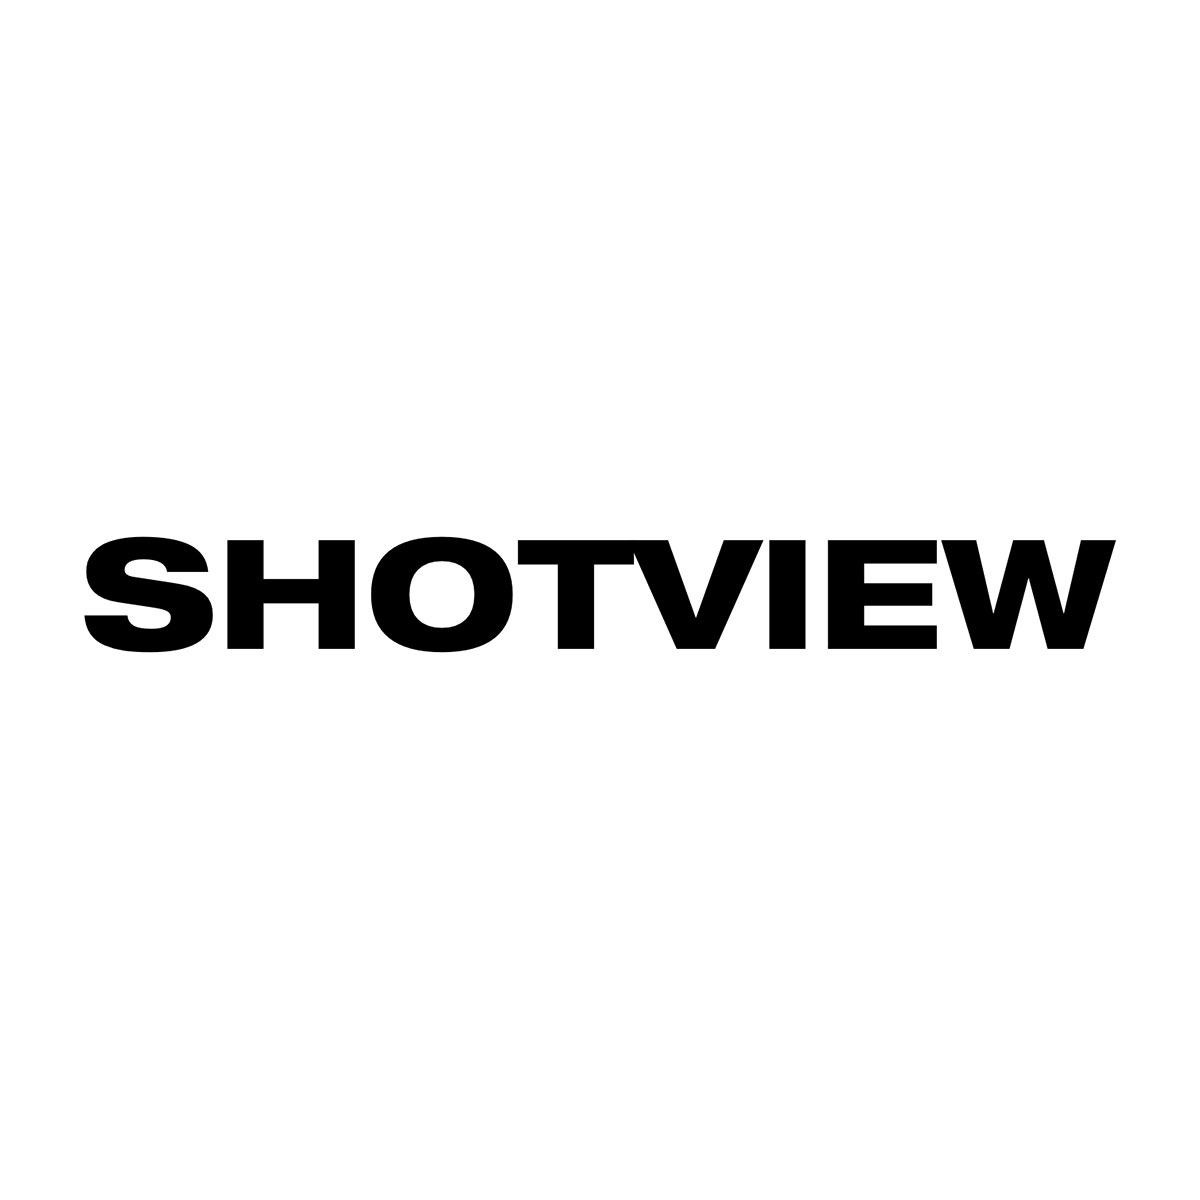 Shotview Photographers Management GmbH